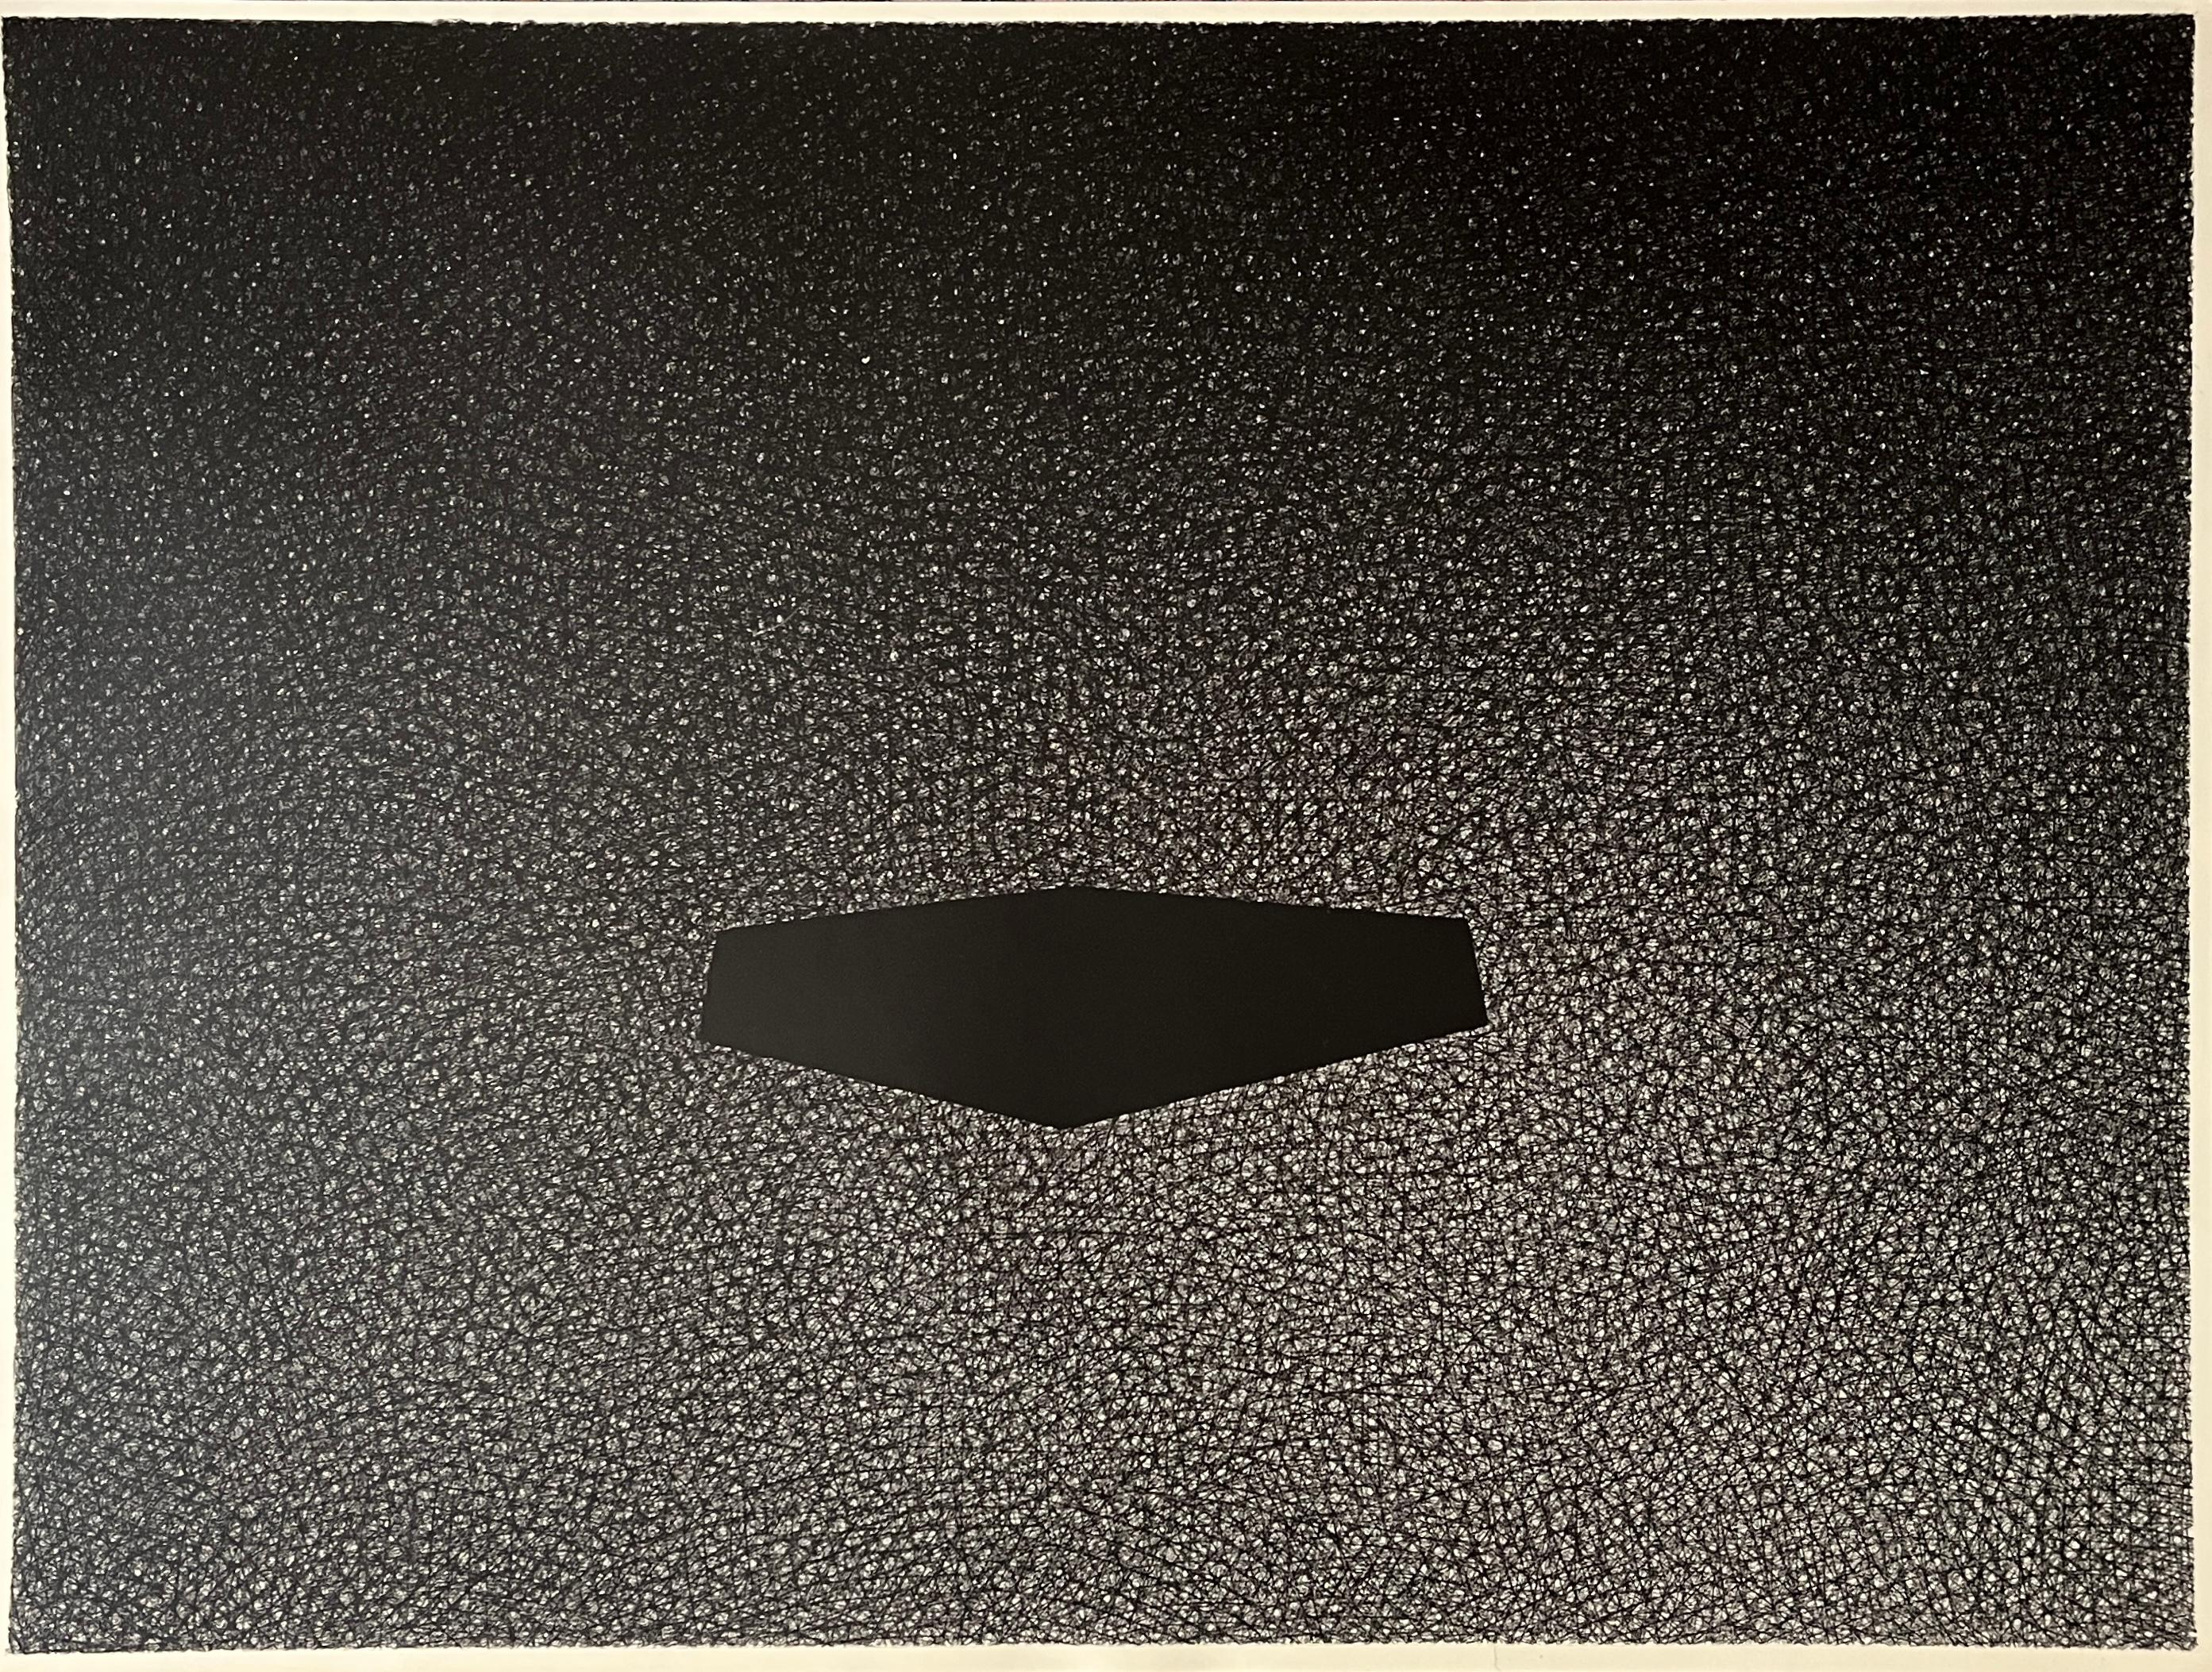 1980 "#8" Minimalist Cross-Hatch Abstract Charcoal Drawing Modern Art